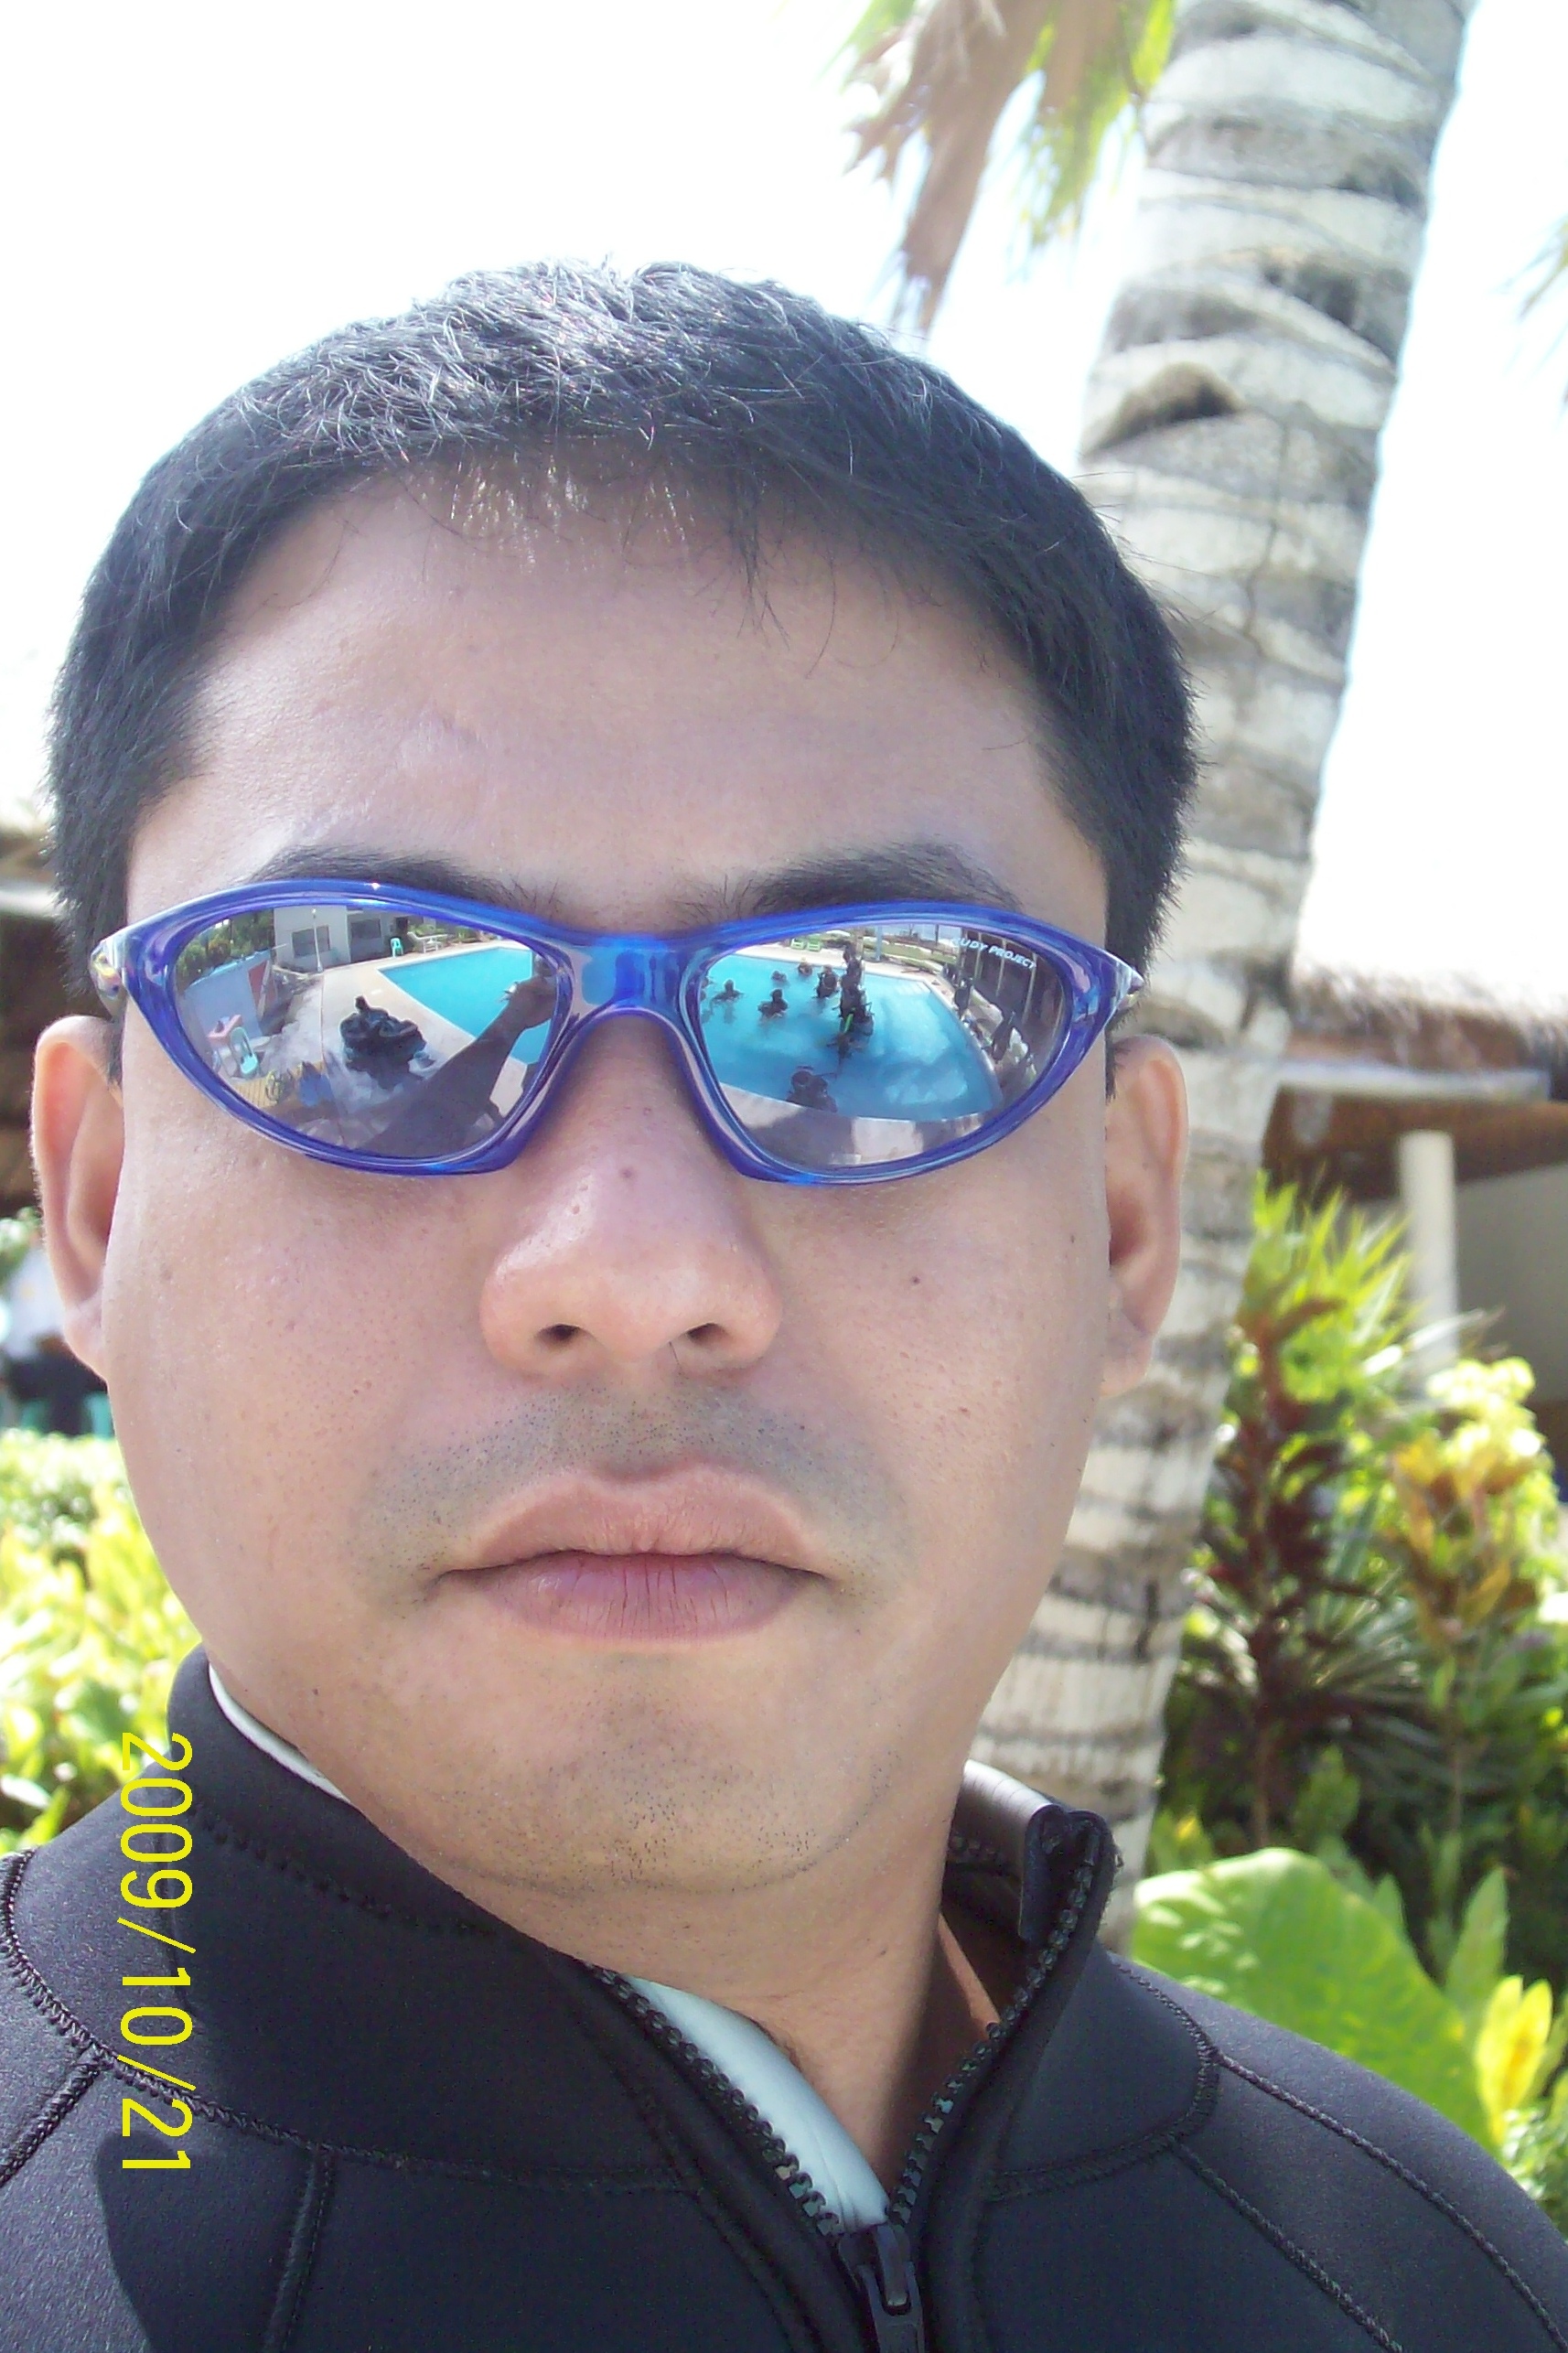 PSI CAADLAWON Chief Bohol Tourist Police.